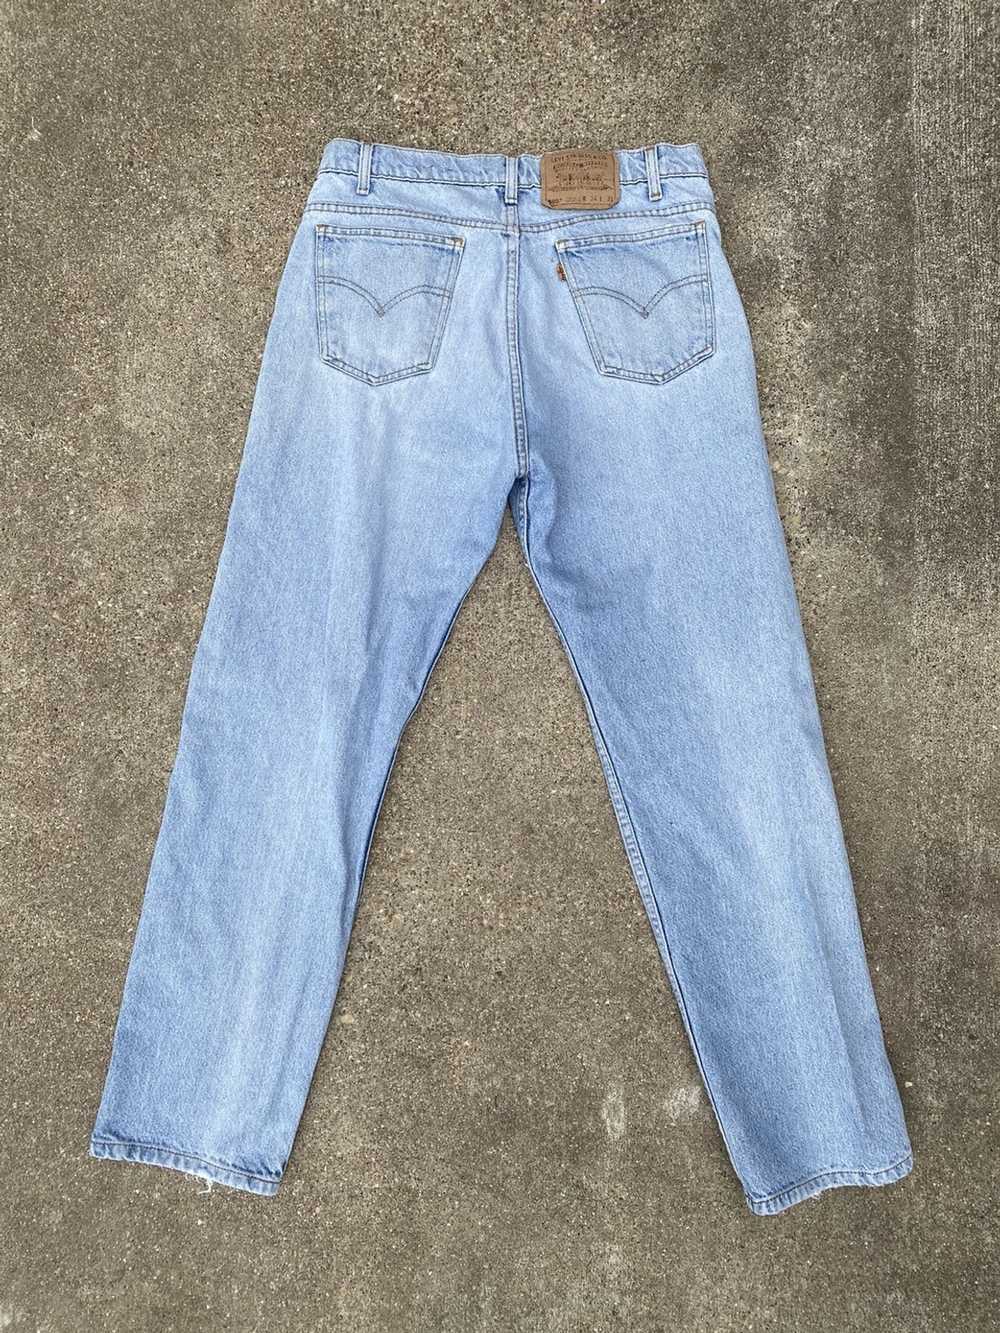 Levi's × Vintage Levis Orange Tab 505 Jeans 90s - image 2